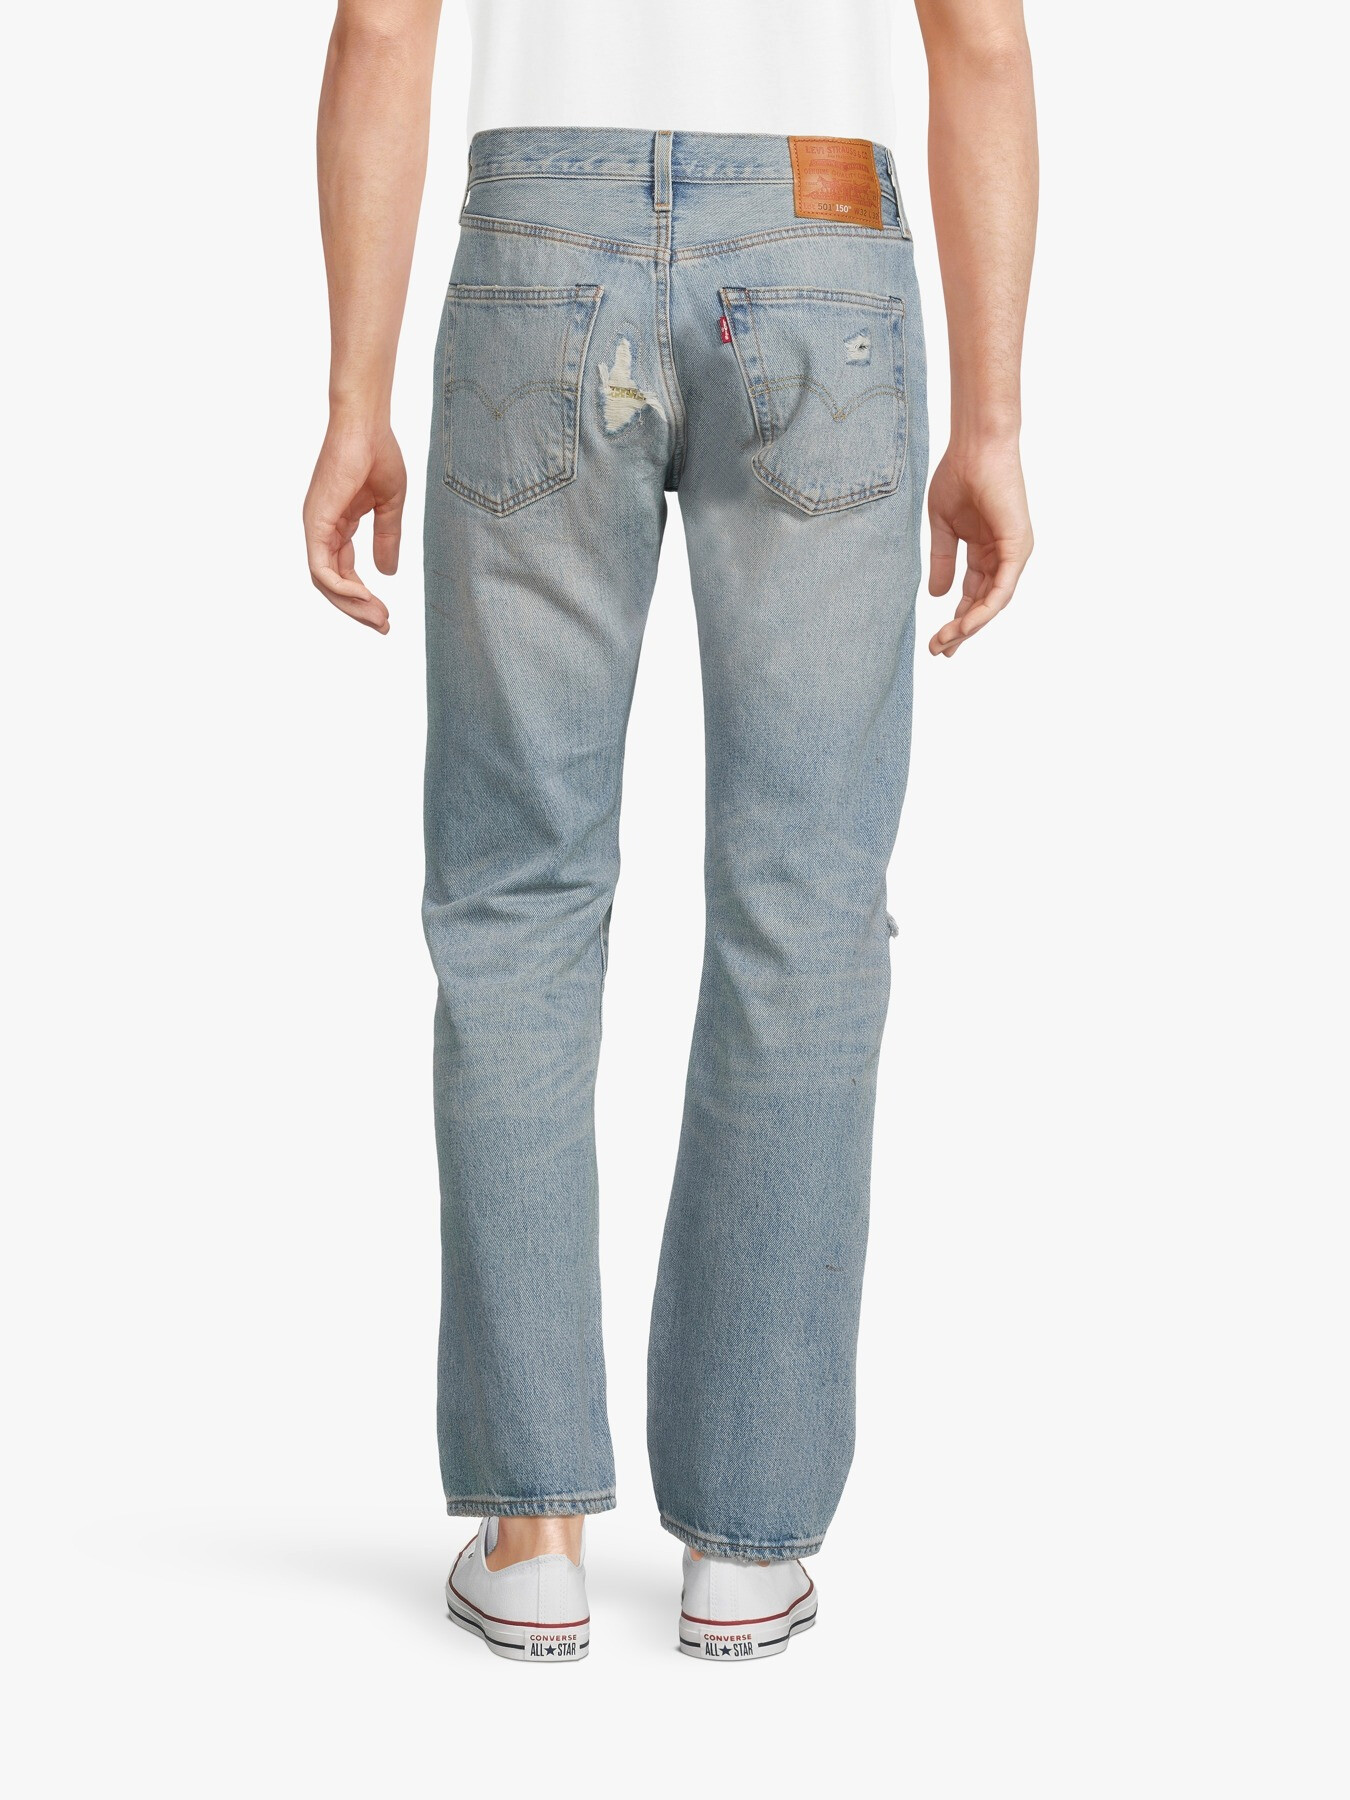 Levi's 501 Ripped Bandana Jeans | Straight | Fenwick